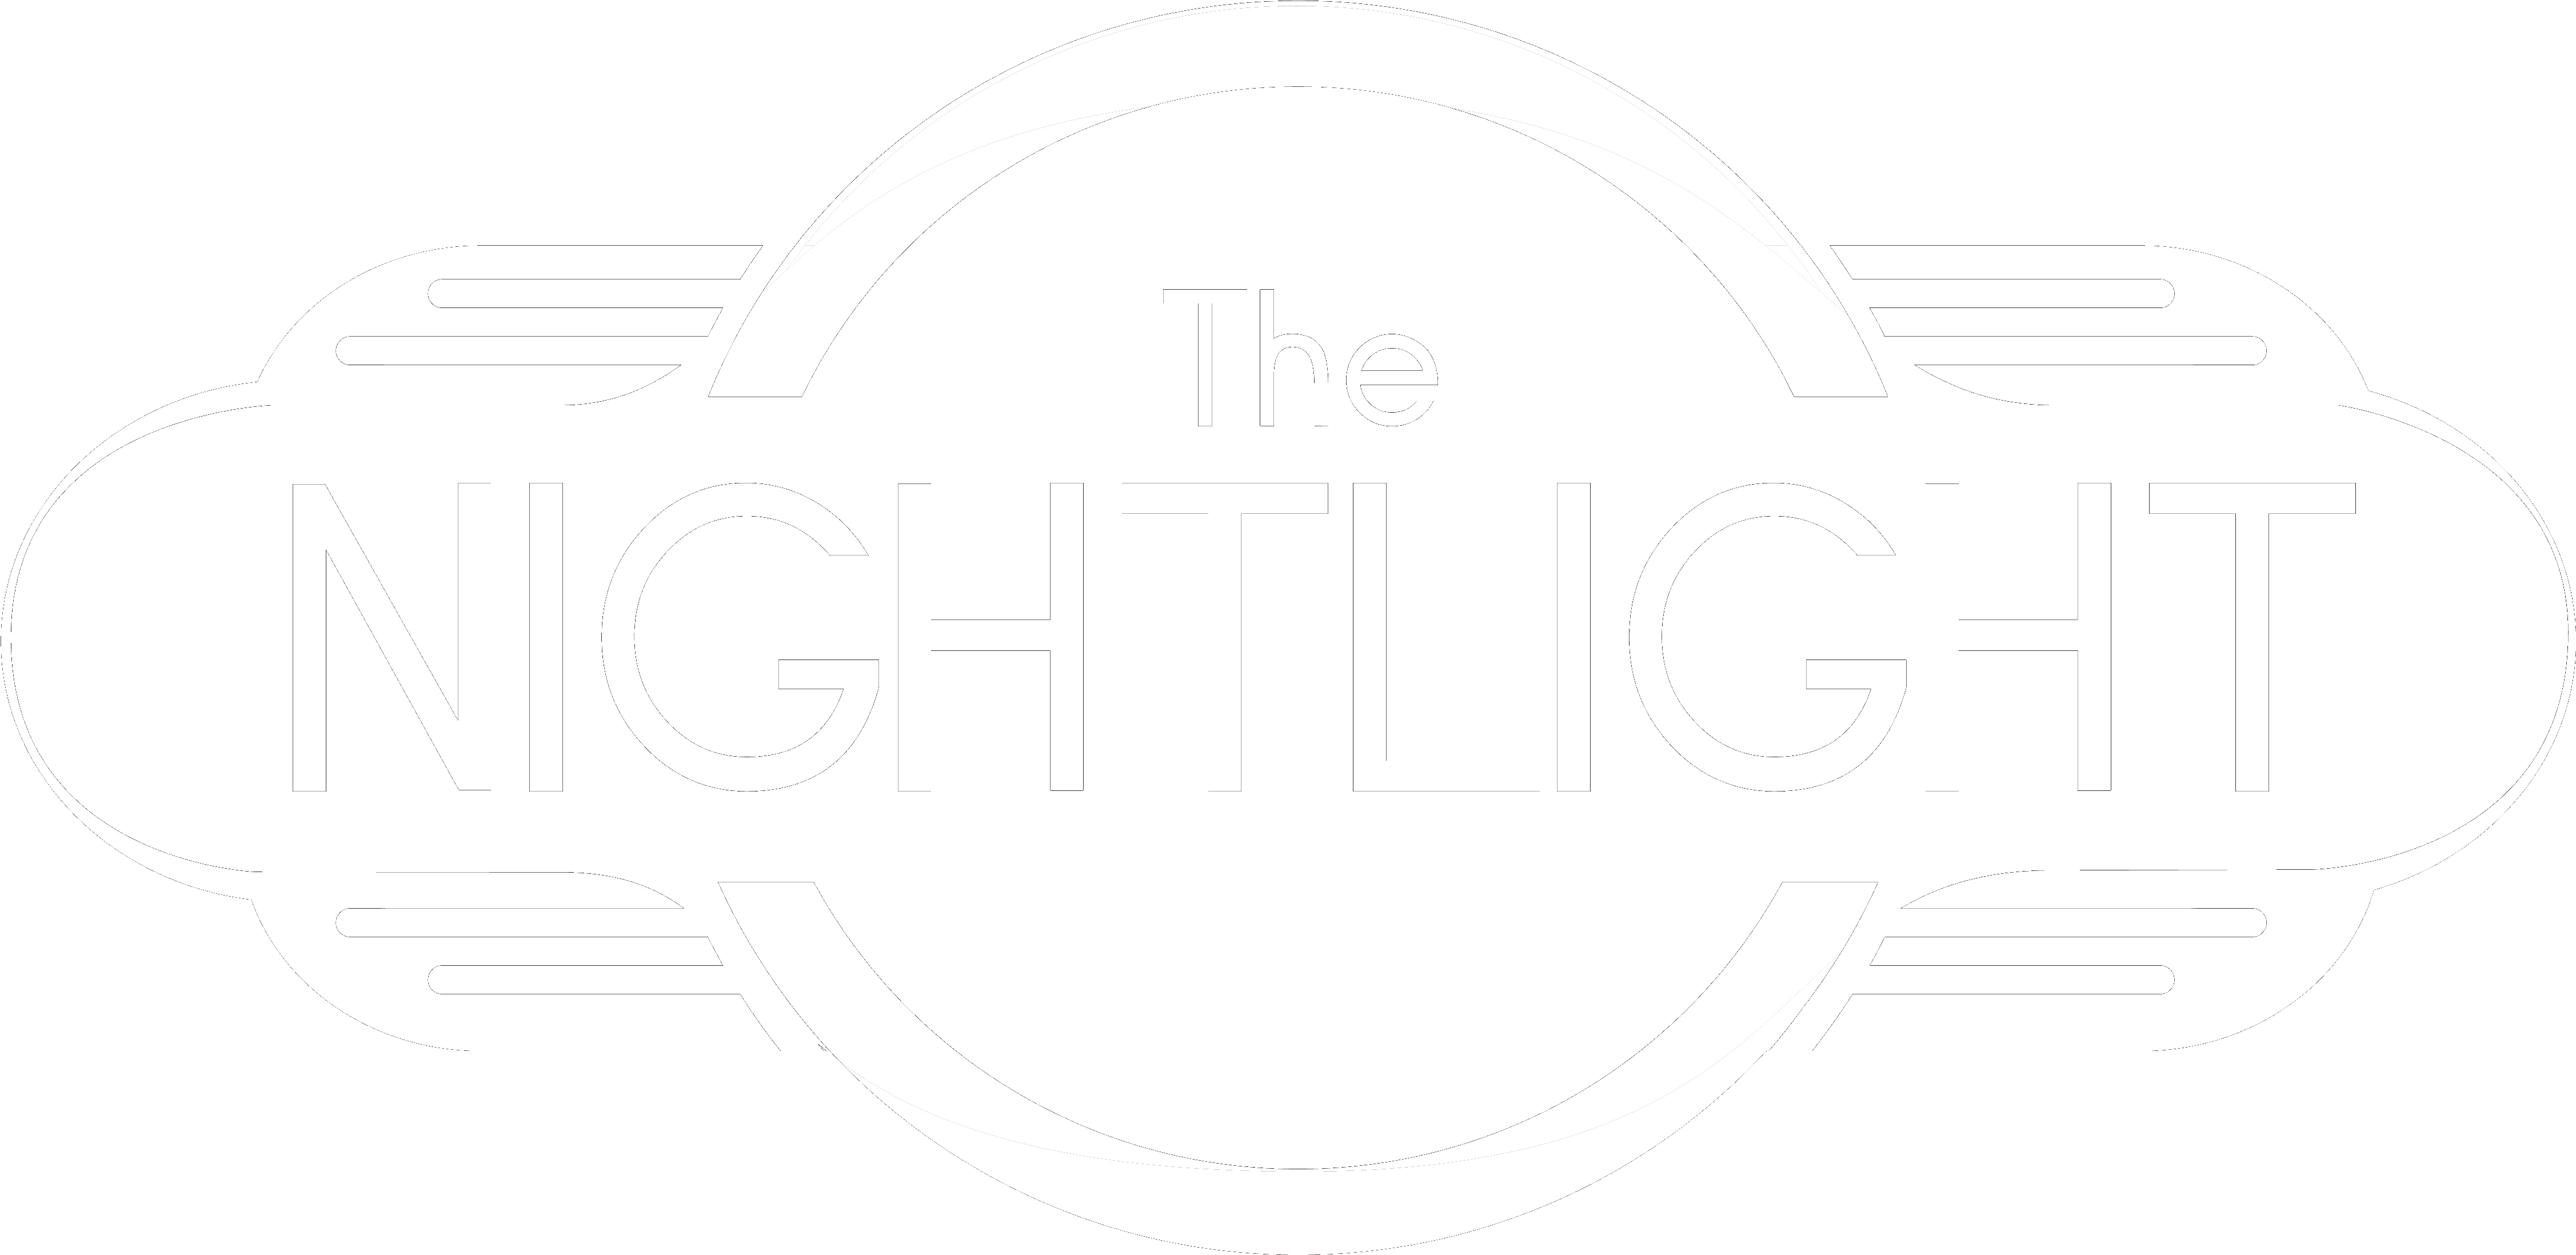 The Nightlight Cinema Logo